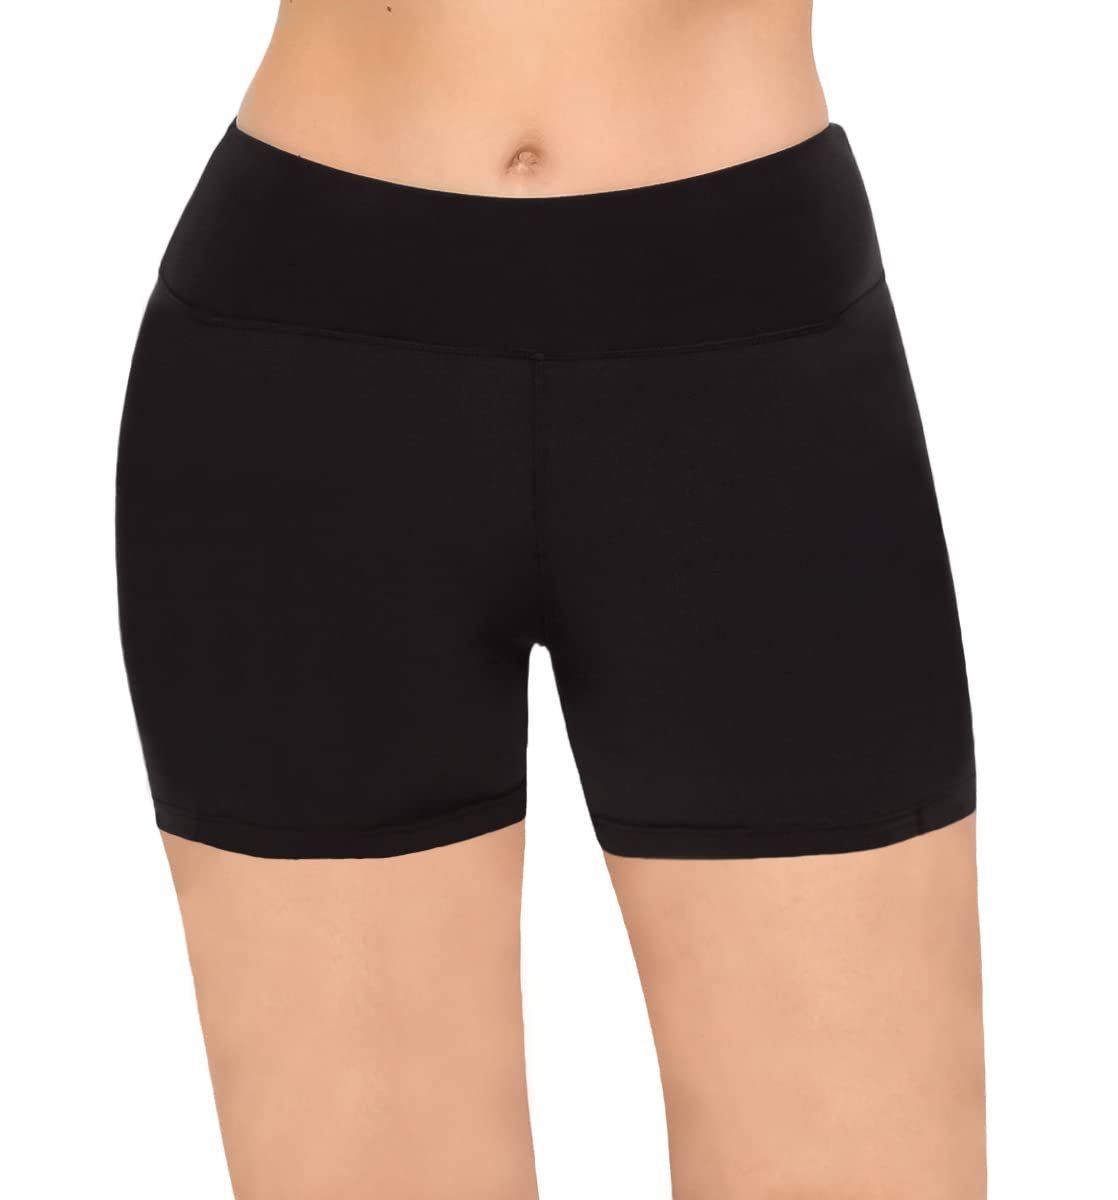 High Waist SATINA Biker Shorts for Women - Black - Size Large (5-Inch) - Yoga Shorts for Regular & Plus Size Women - Free Shipping & Returns